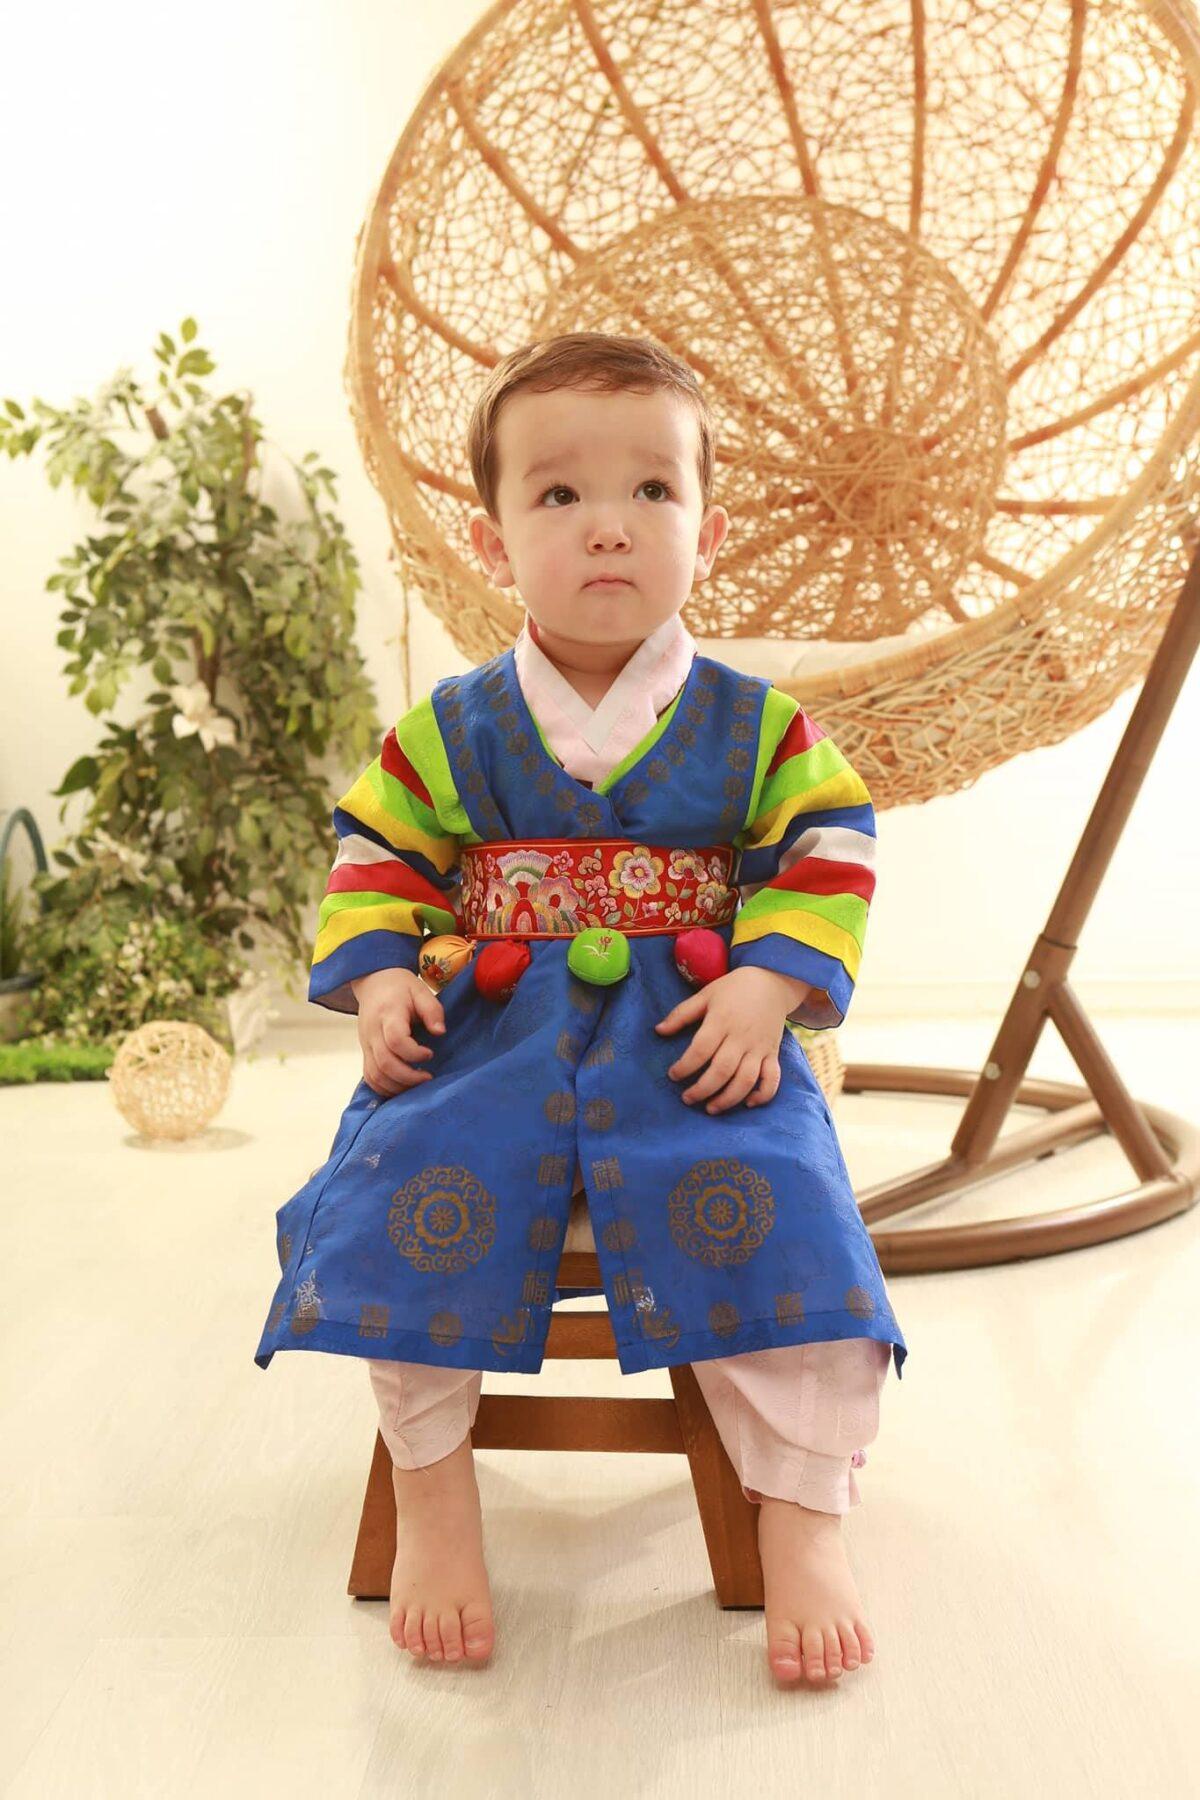 Daniel in a Hanbok, a traditional Korean attire. (Photo courtesy of <a href="https://www.facebook.com/stevenconversemusic/">Steven Converse</a>)